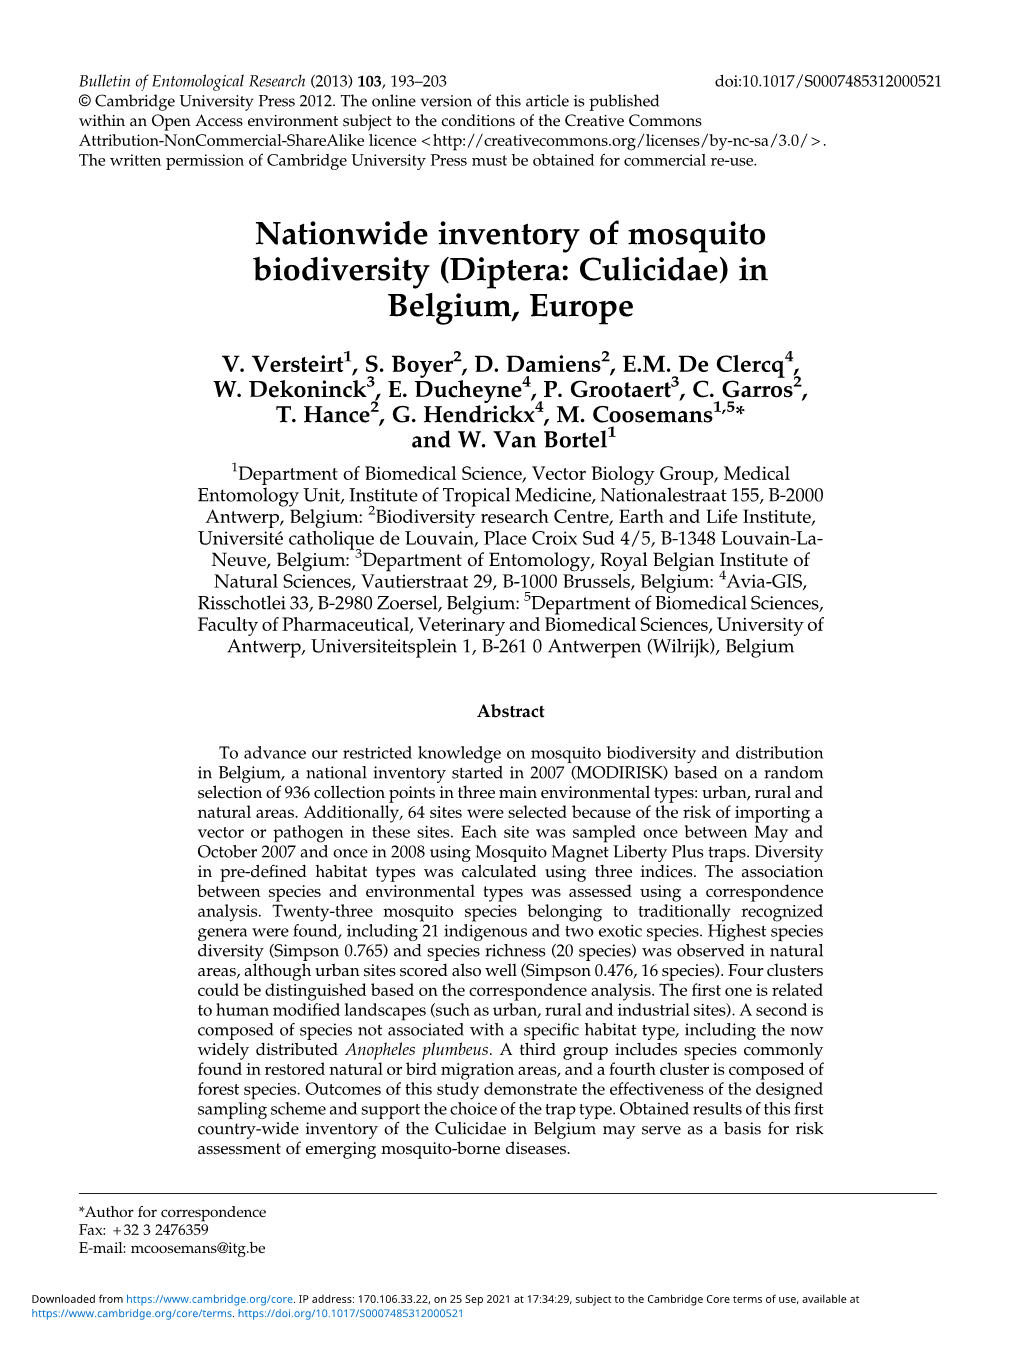 Nationwide Inventory of Mosquito Biodiversity (Diptera: Culicidae) in Belgium, Europe